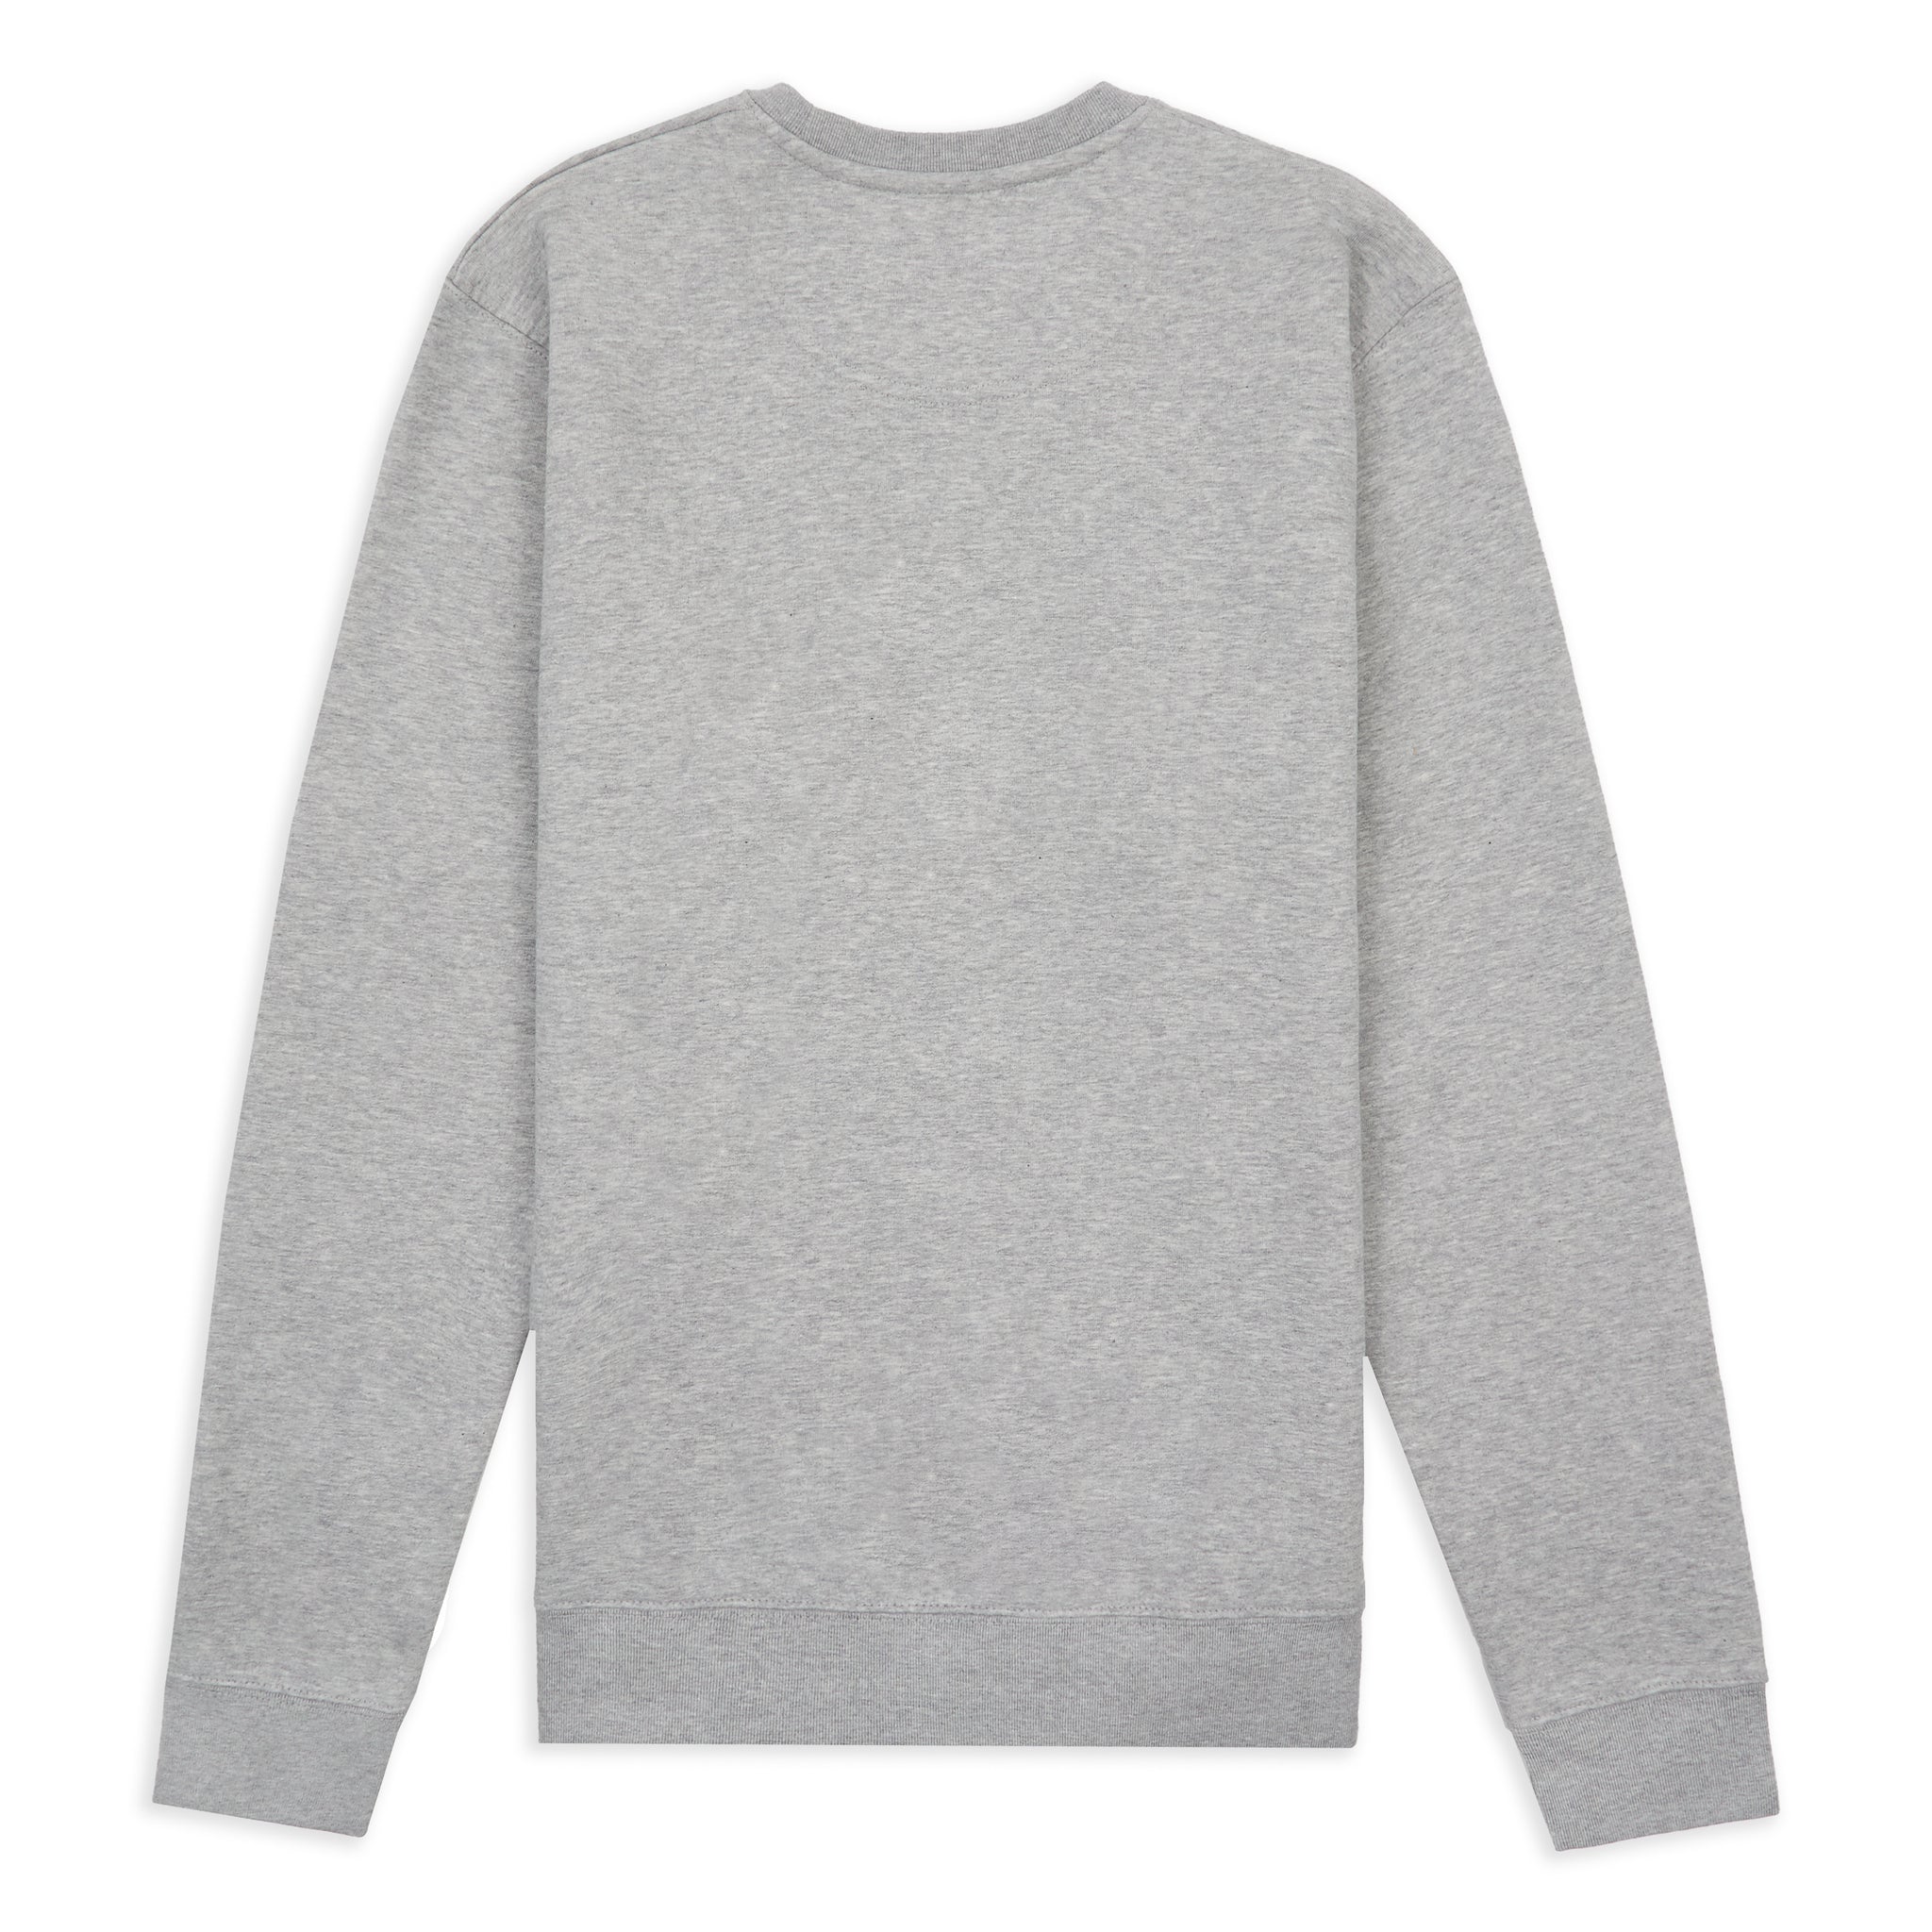 Grey Seal 30 Year Sweatshirt | Sustainable fashion by Tom Cridland